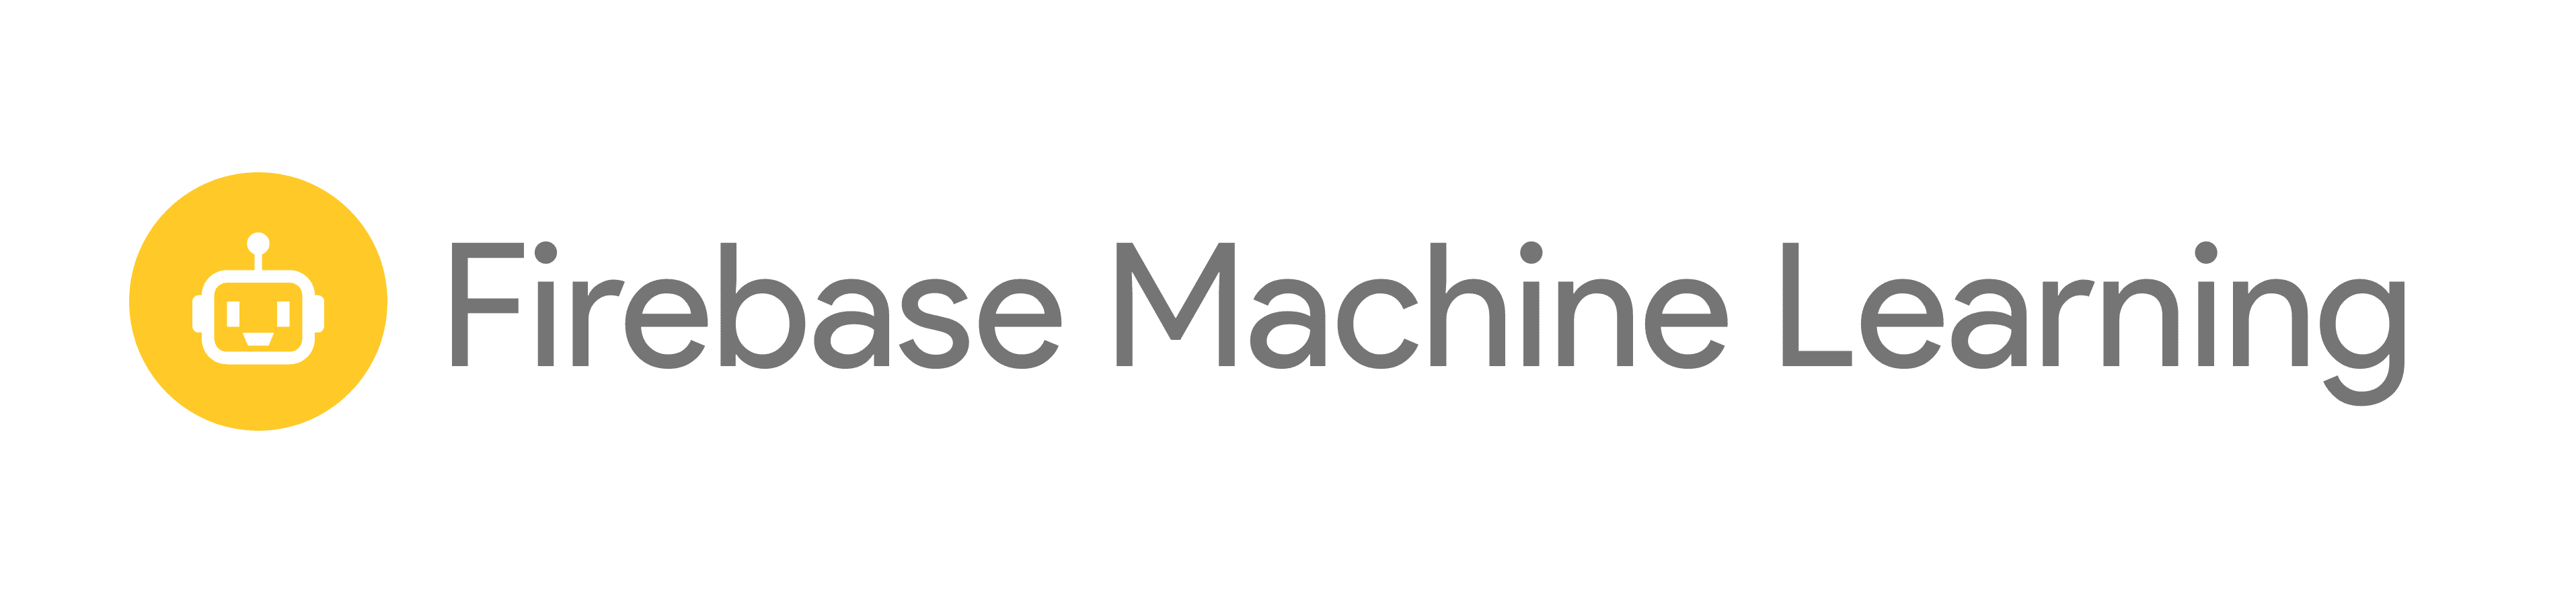 Firebase Machine Learning.png